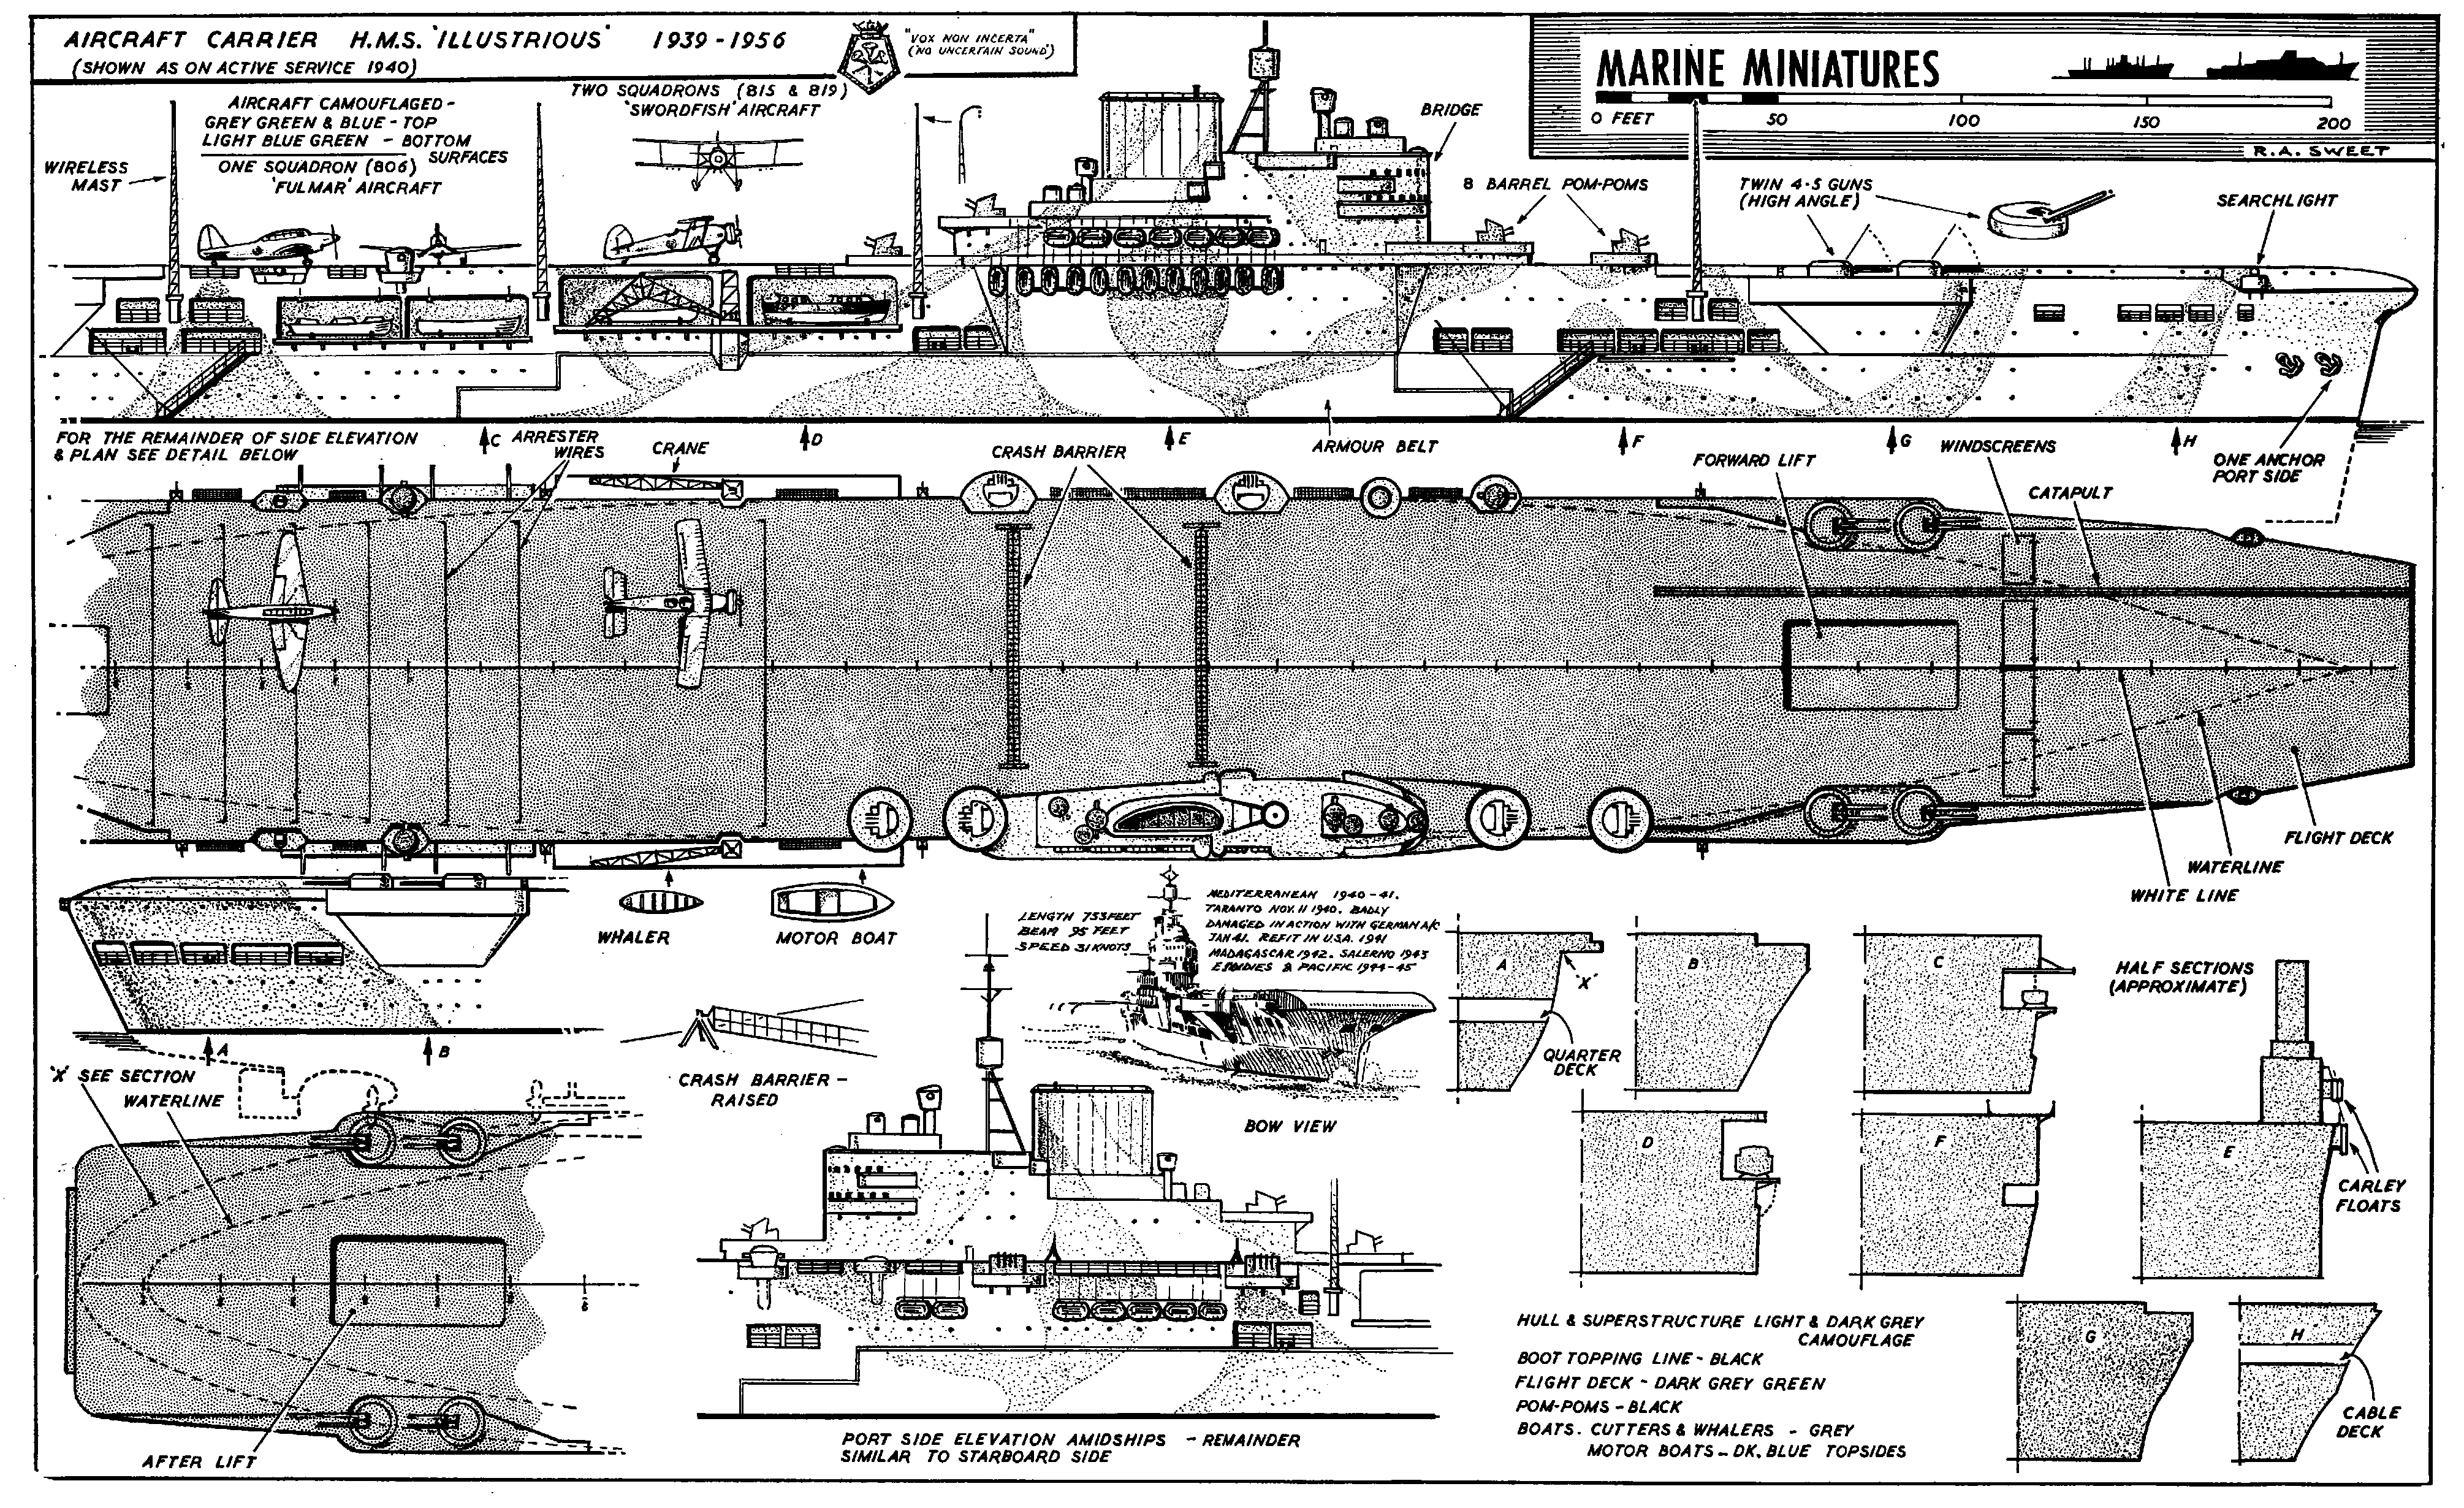 1:96 scale WW2 carrier H M S Illustrious